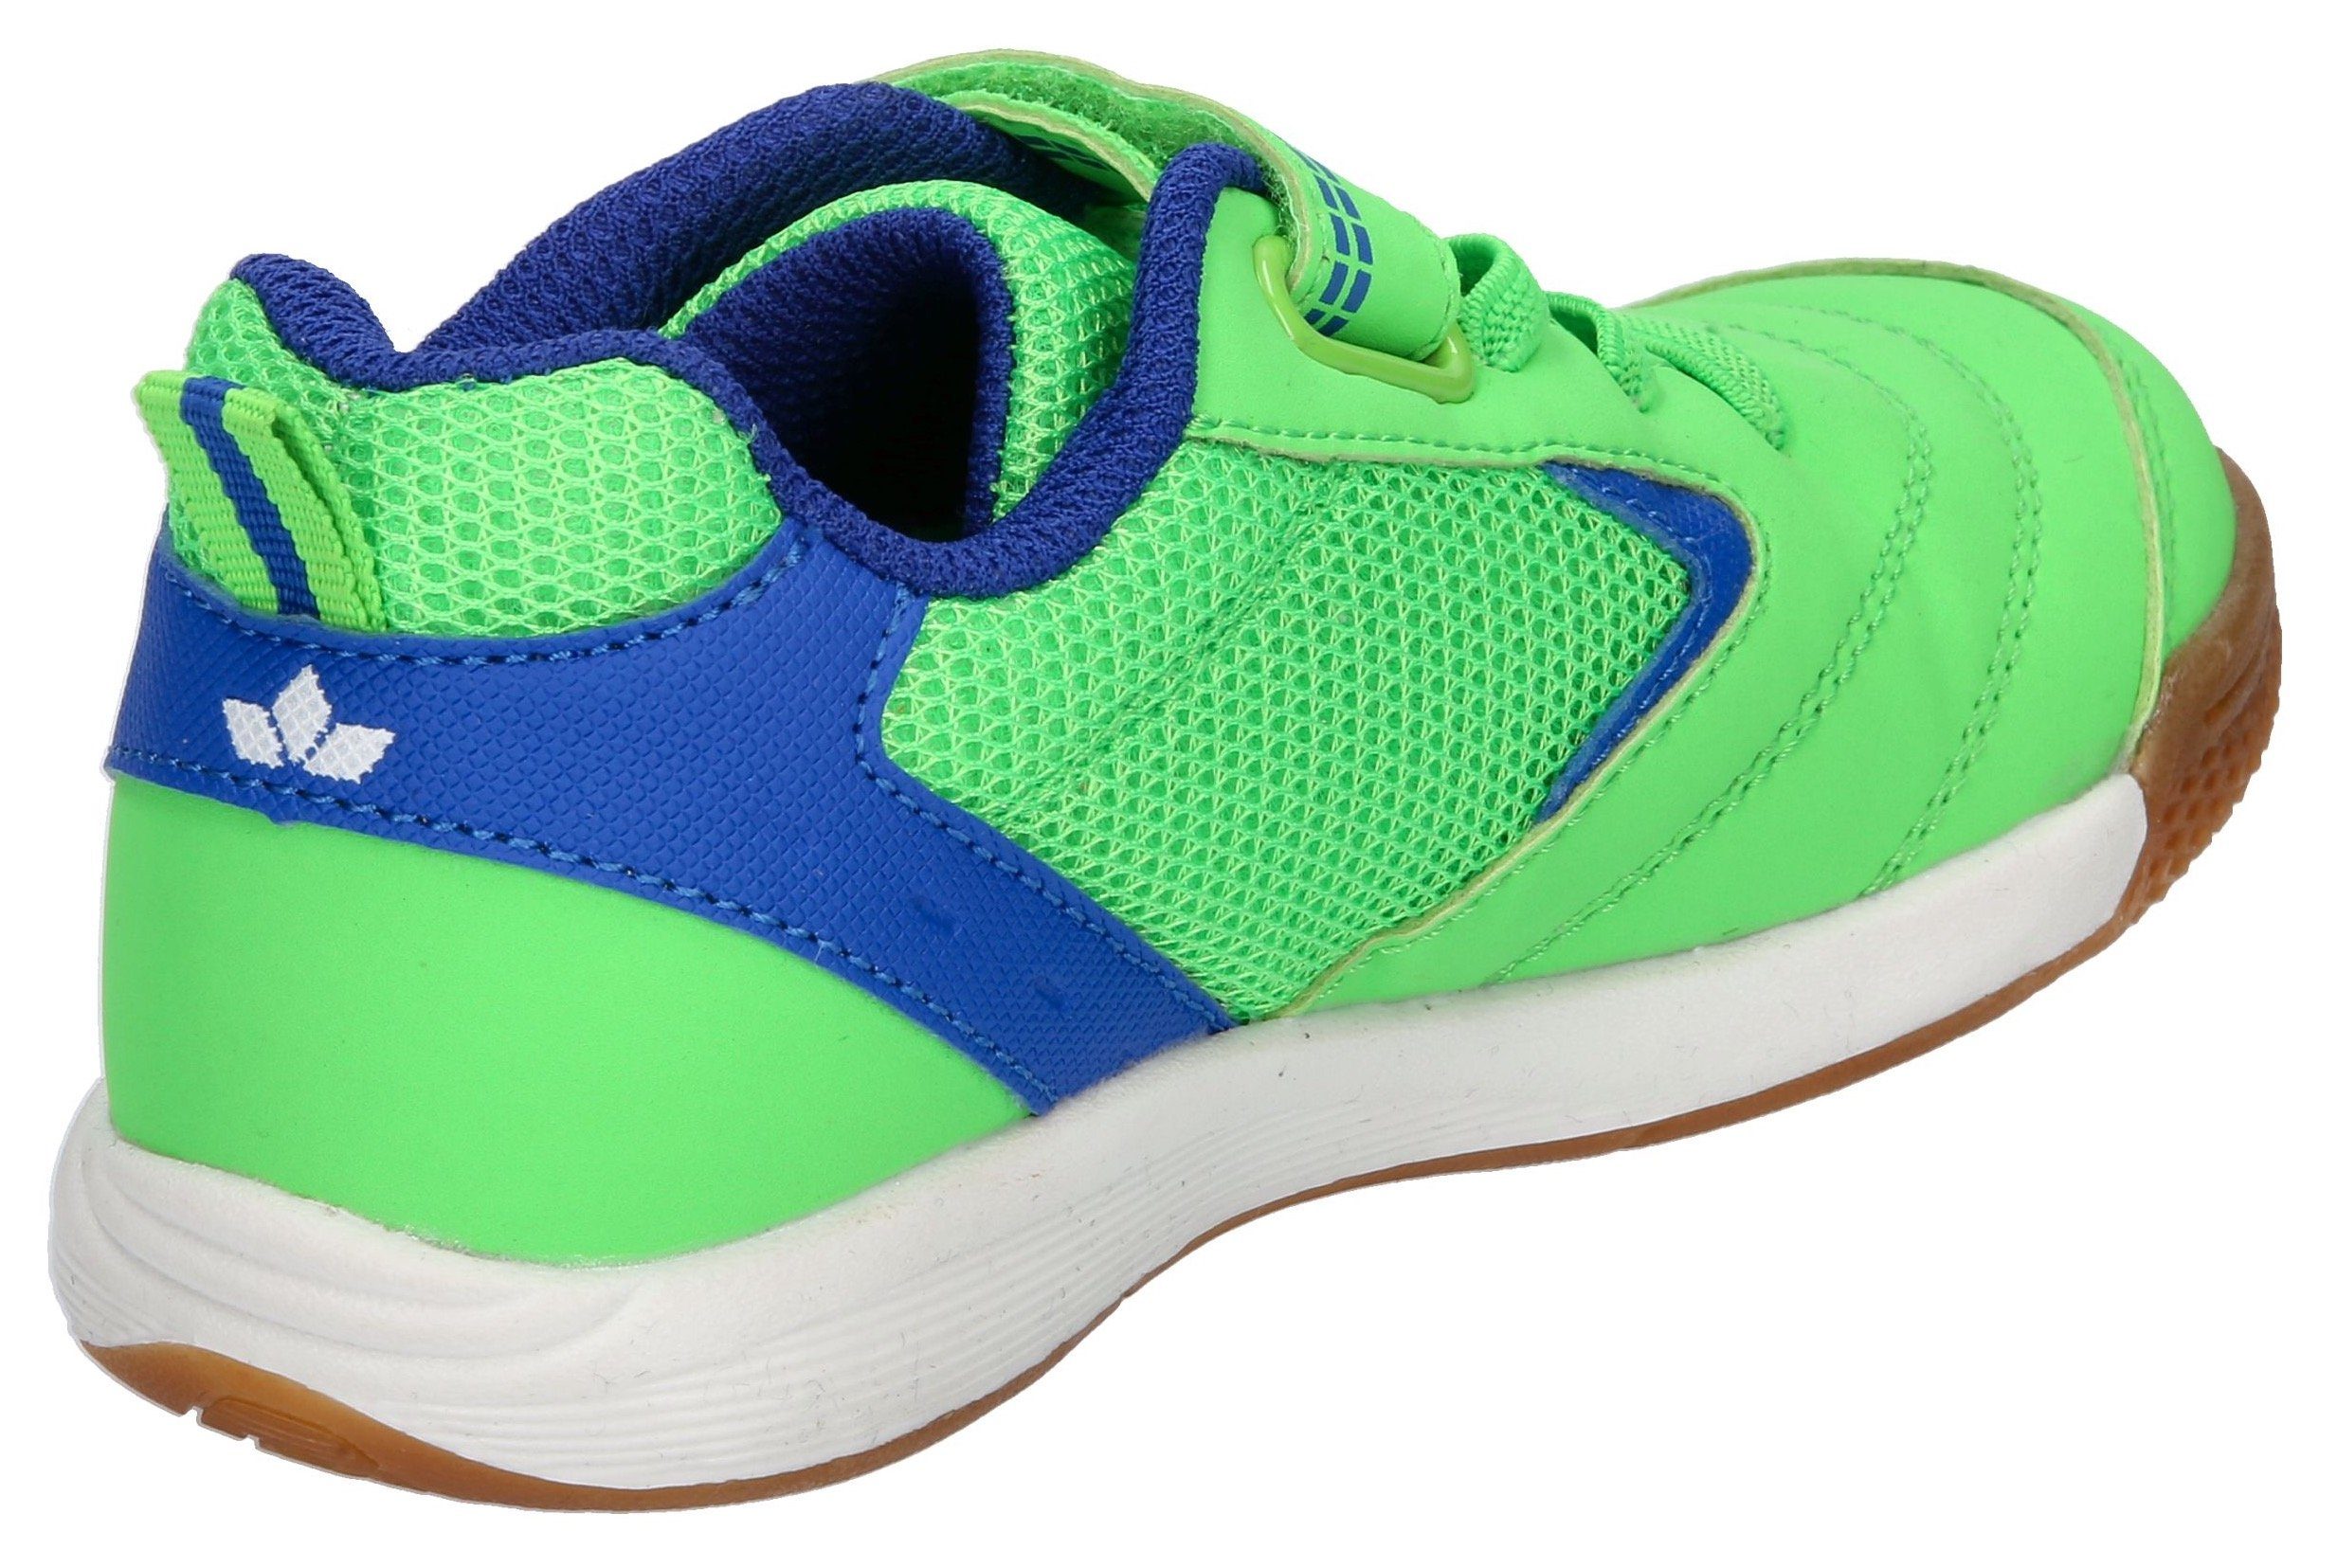 Lico Ari VS mit Laufsohle grün-blau Sneaker heller WMS